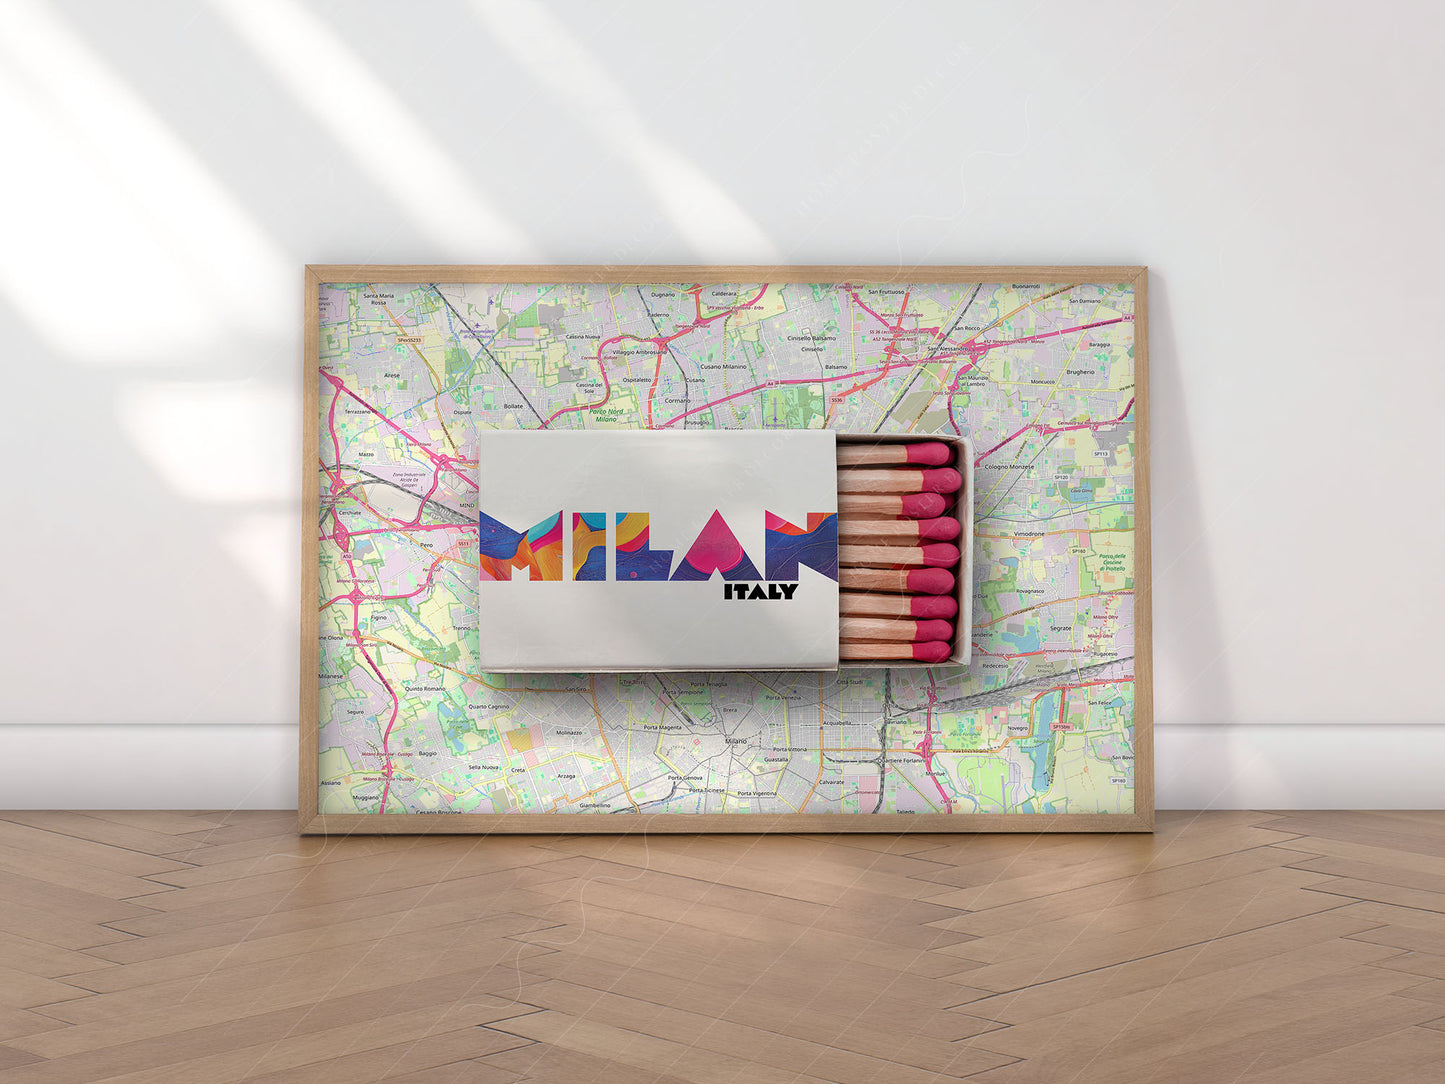 Milan Print, Matchbox Photo, Map City Wall Art